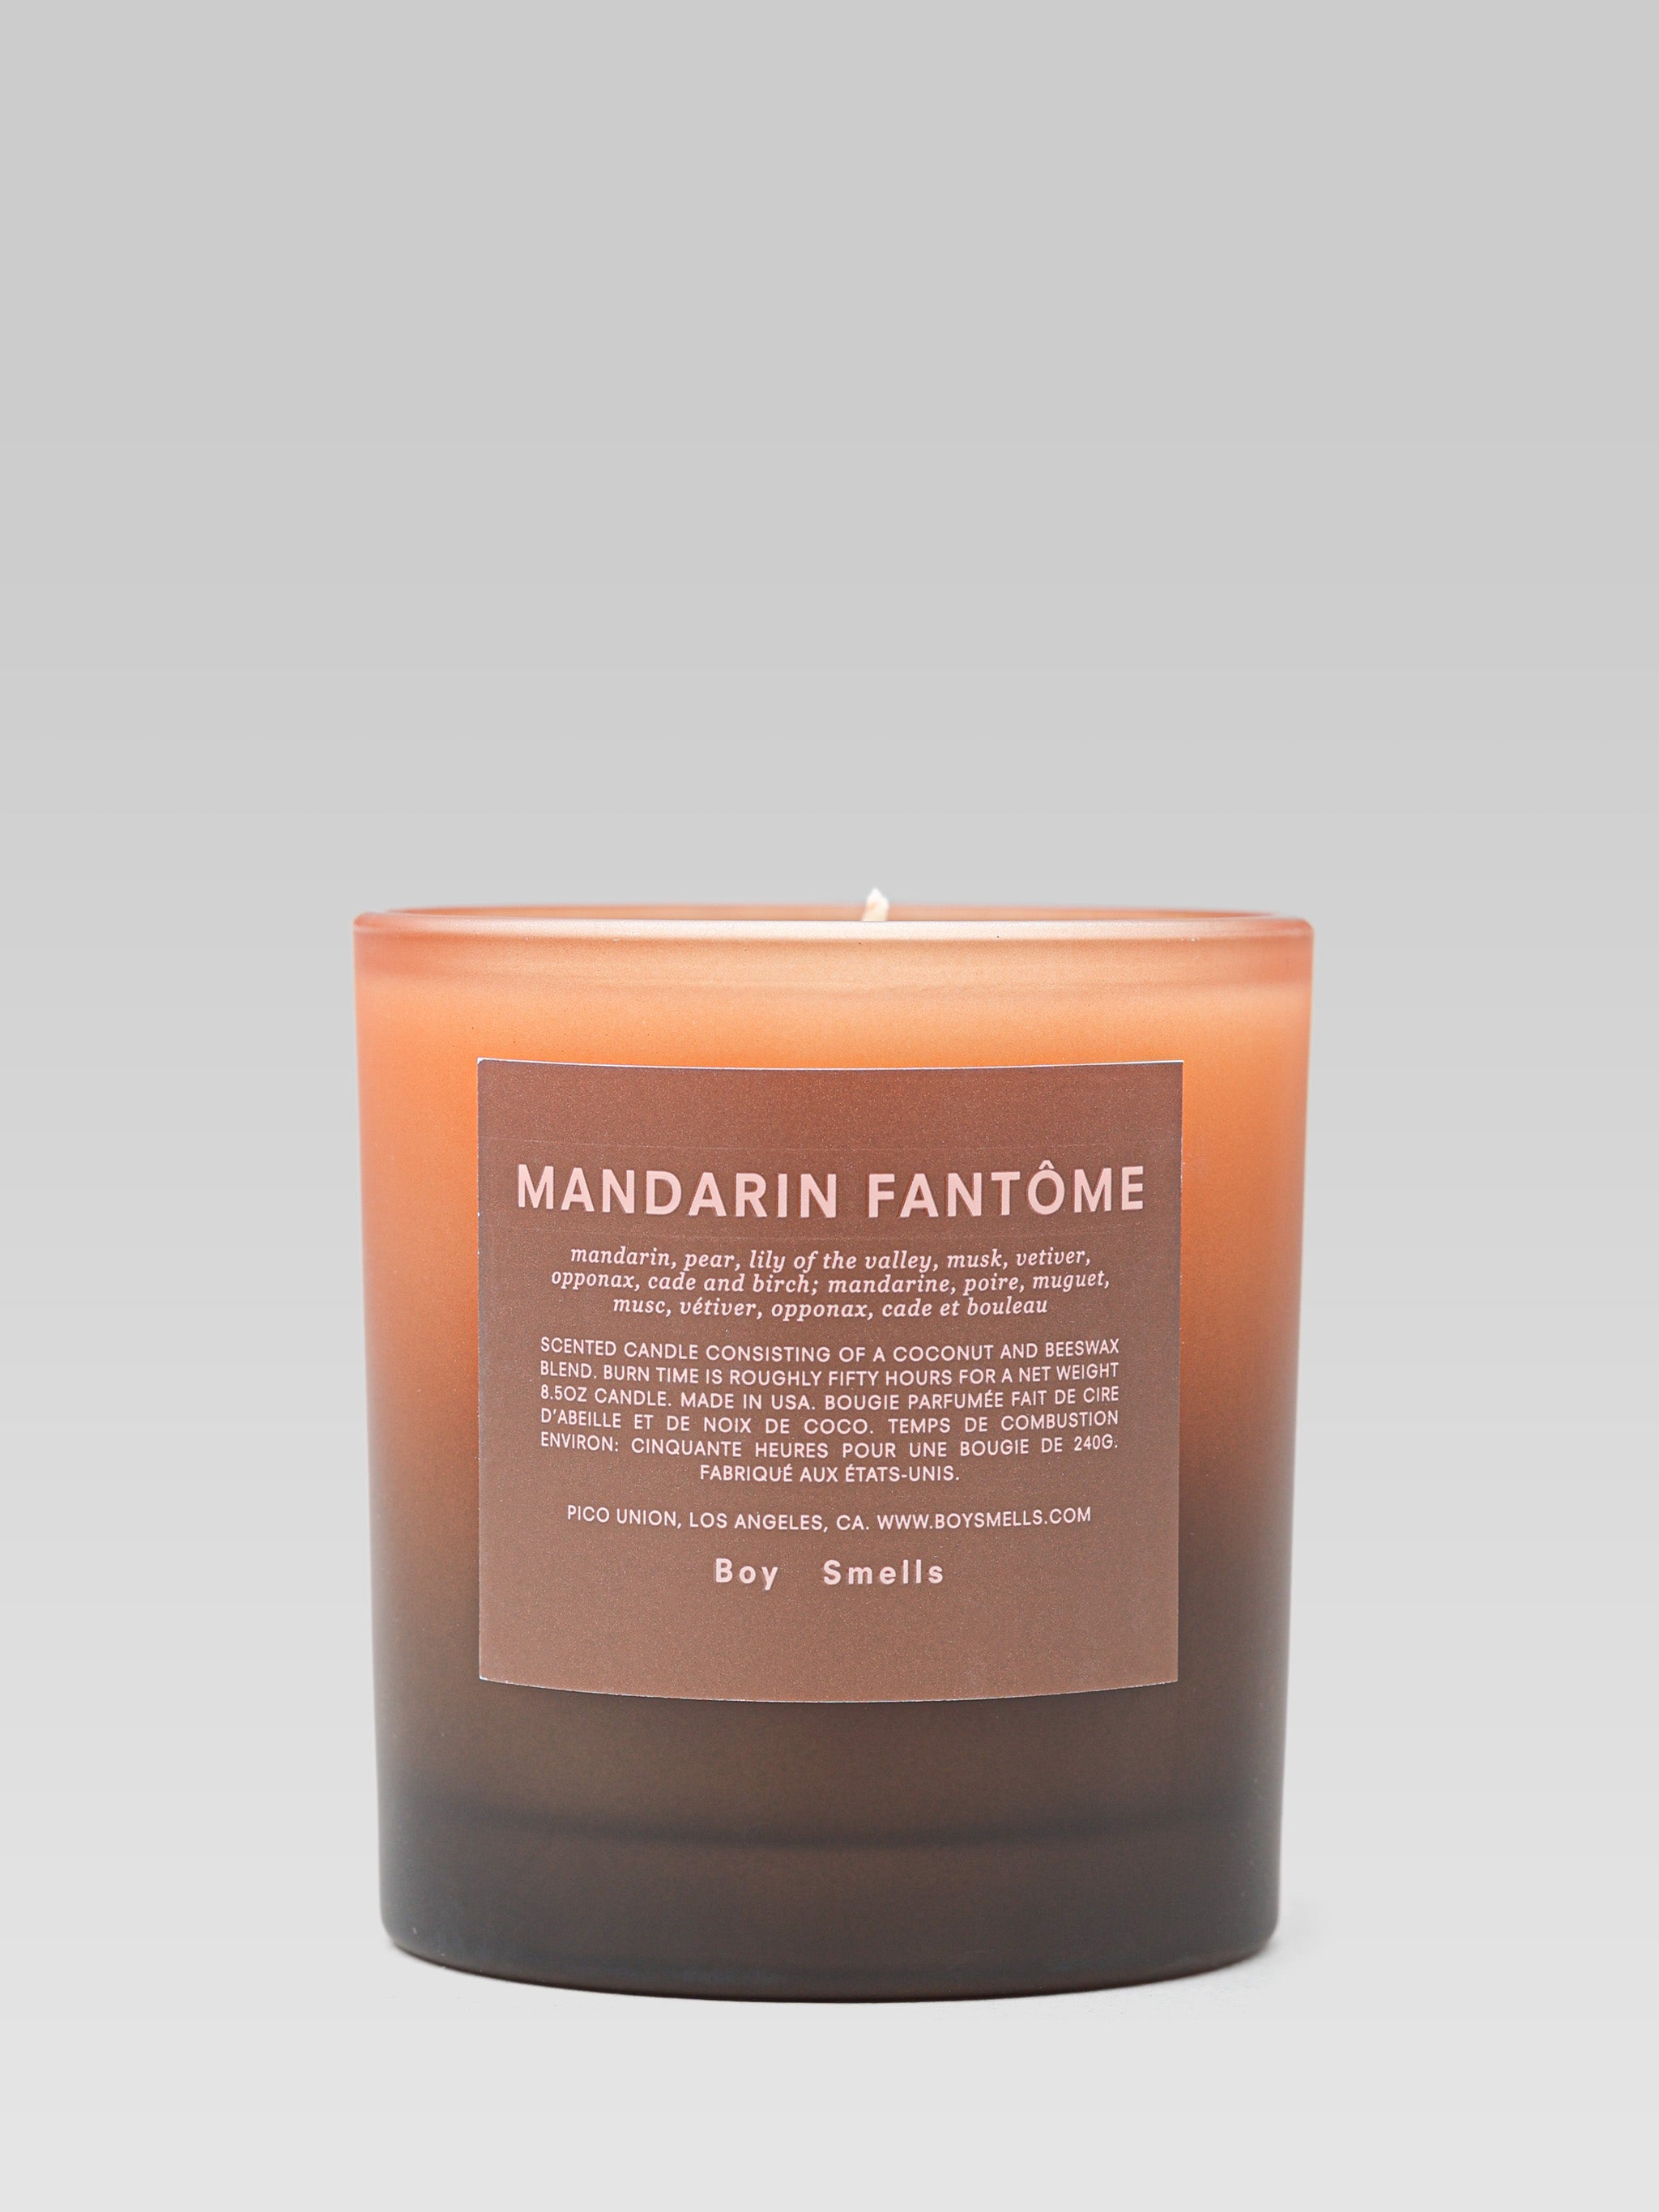 BOY SMELLS Mandarin Fantome Candle product shot